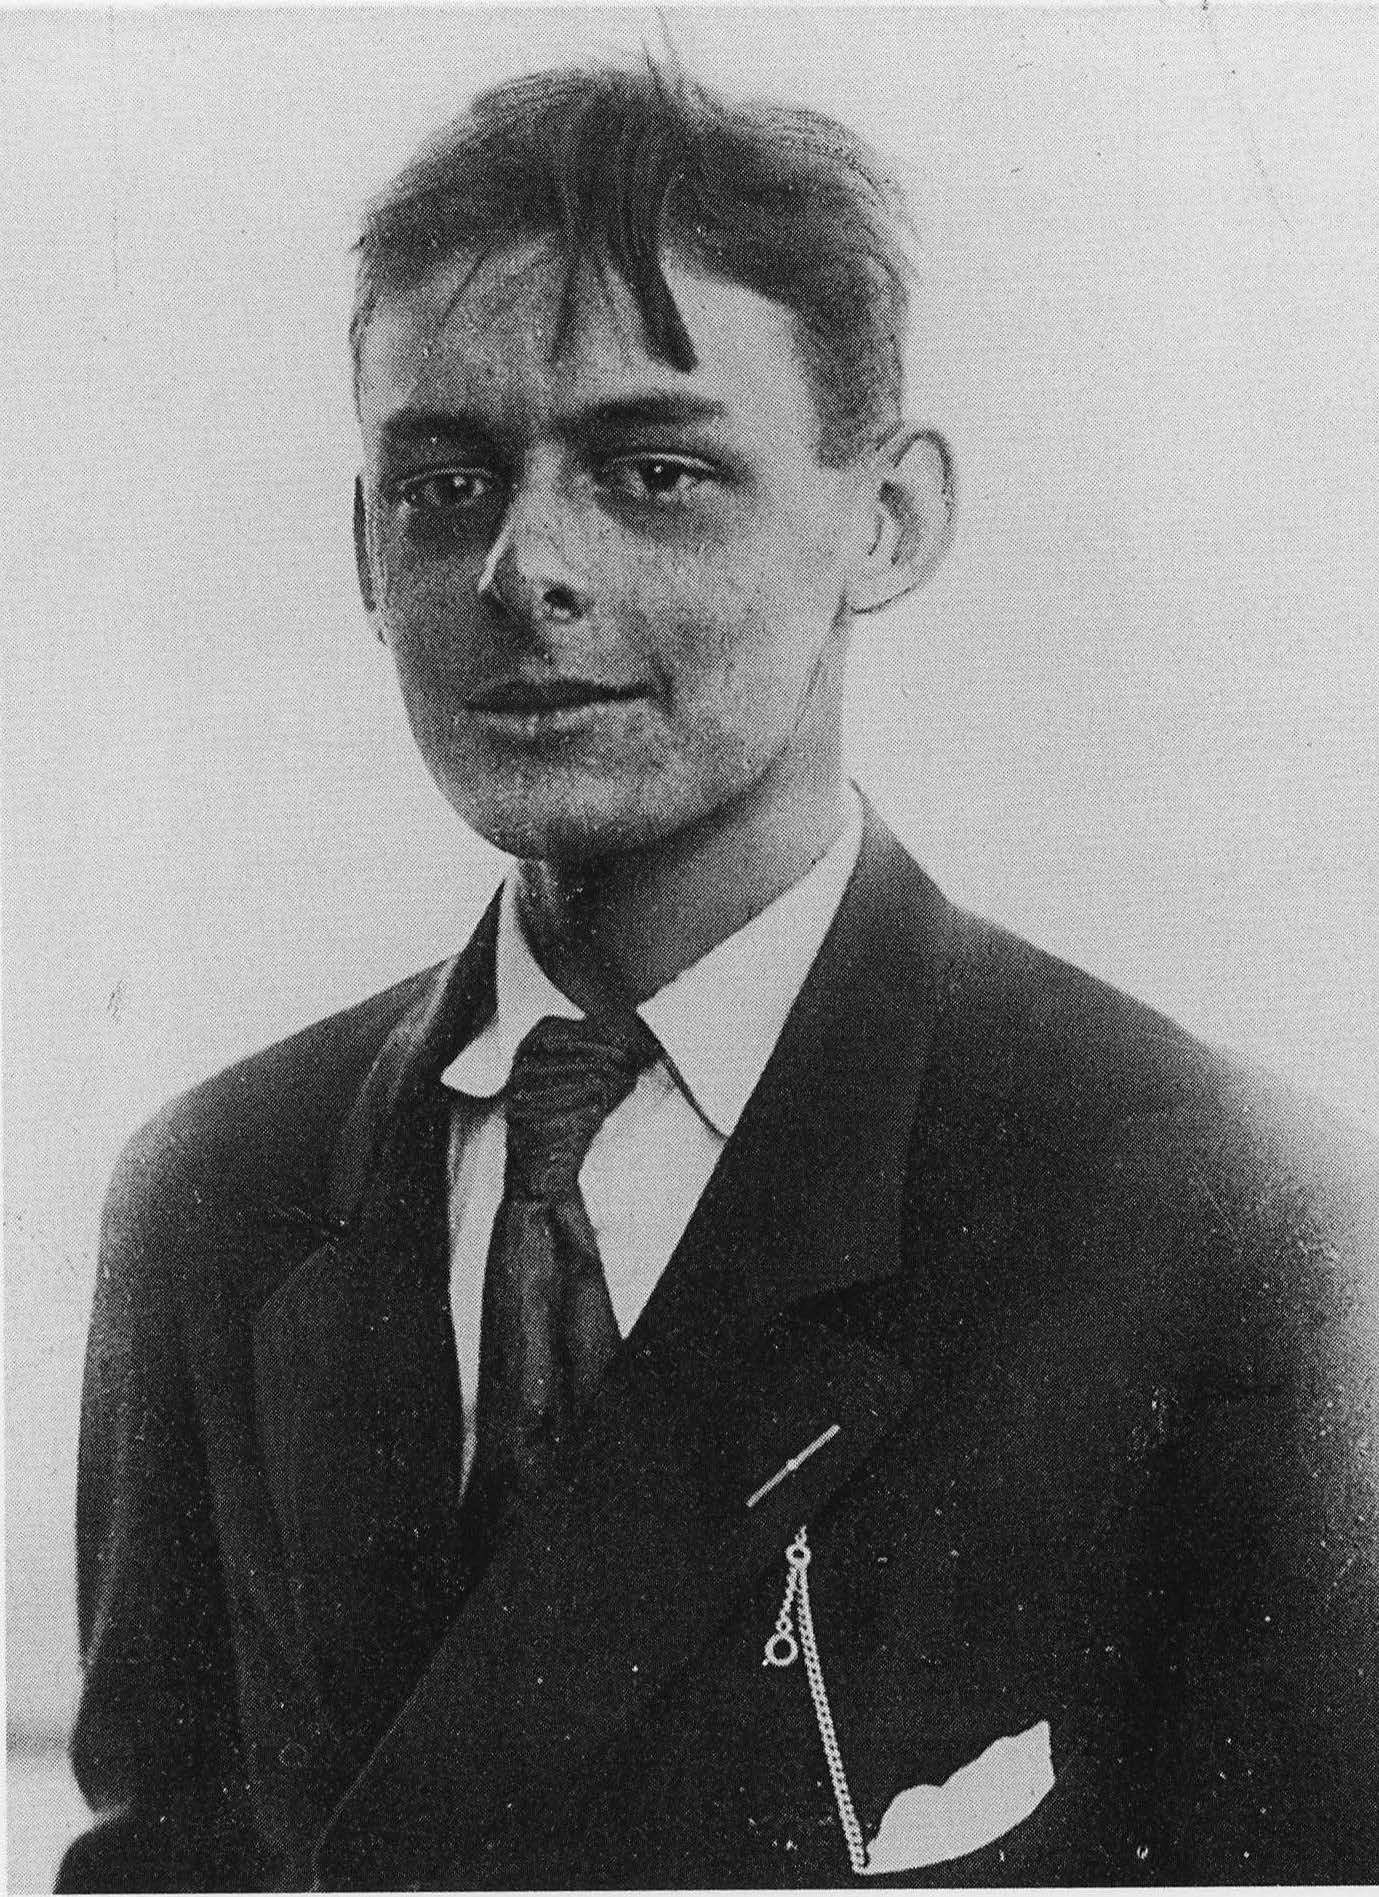 4. Eliot, age 18 (1907), as Harvard undergraduate